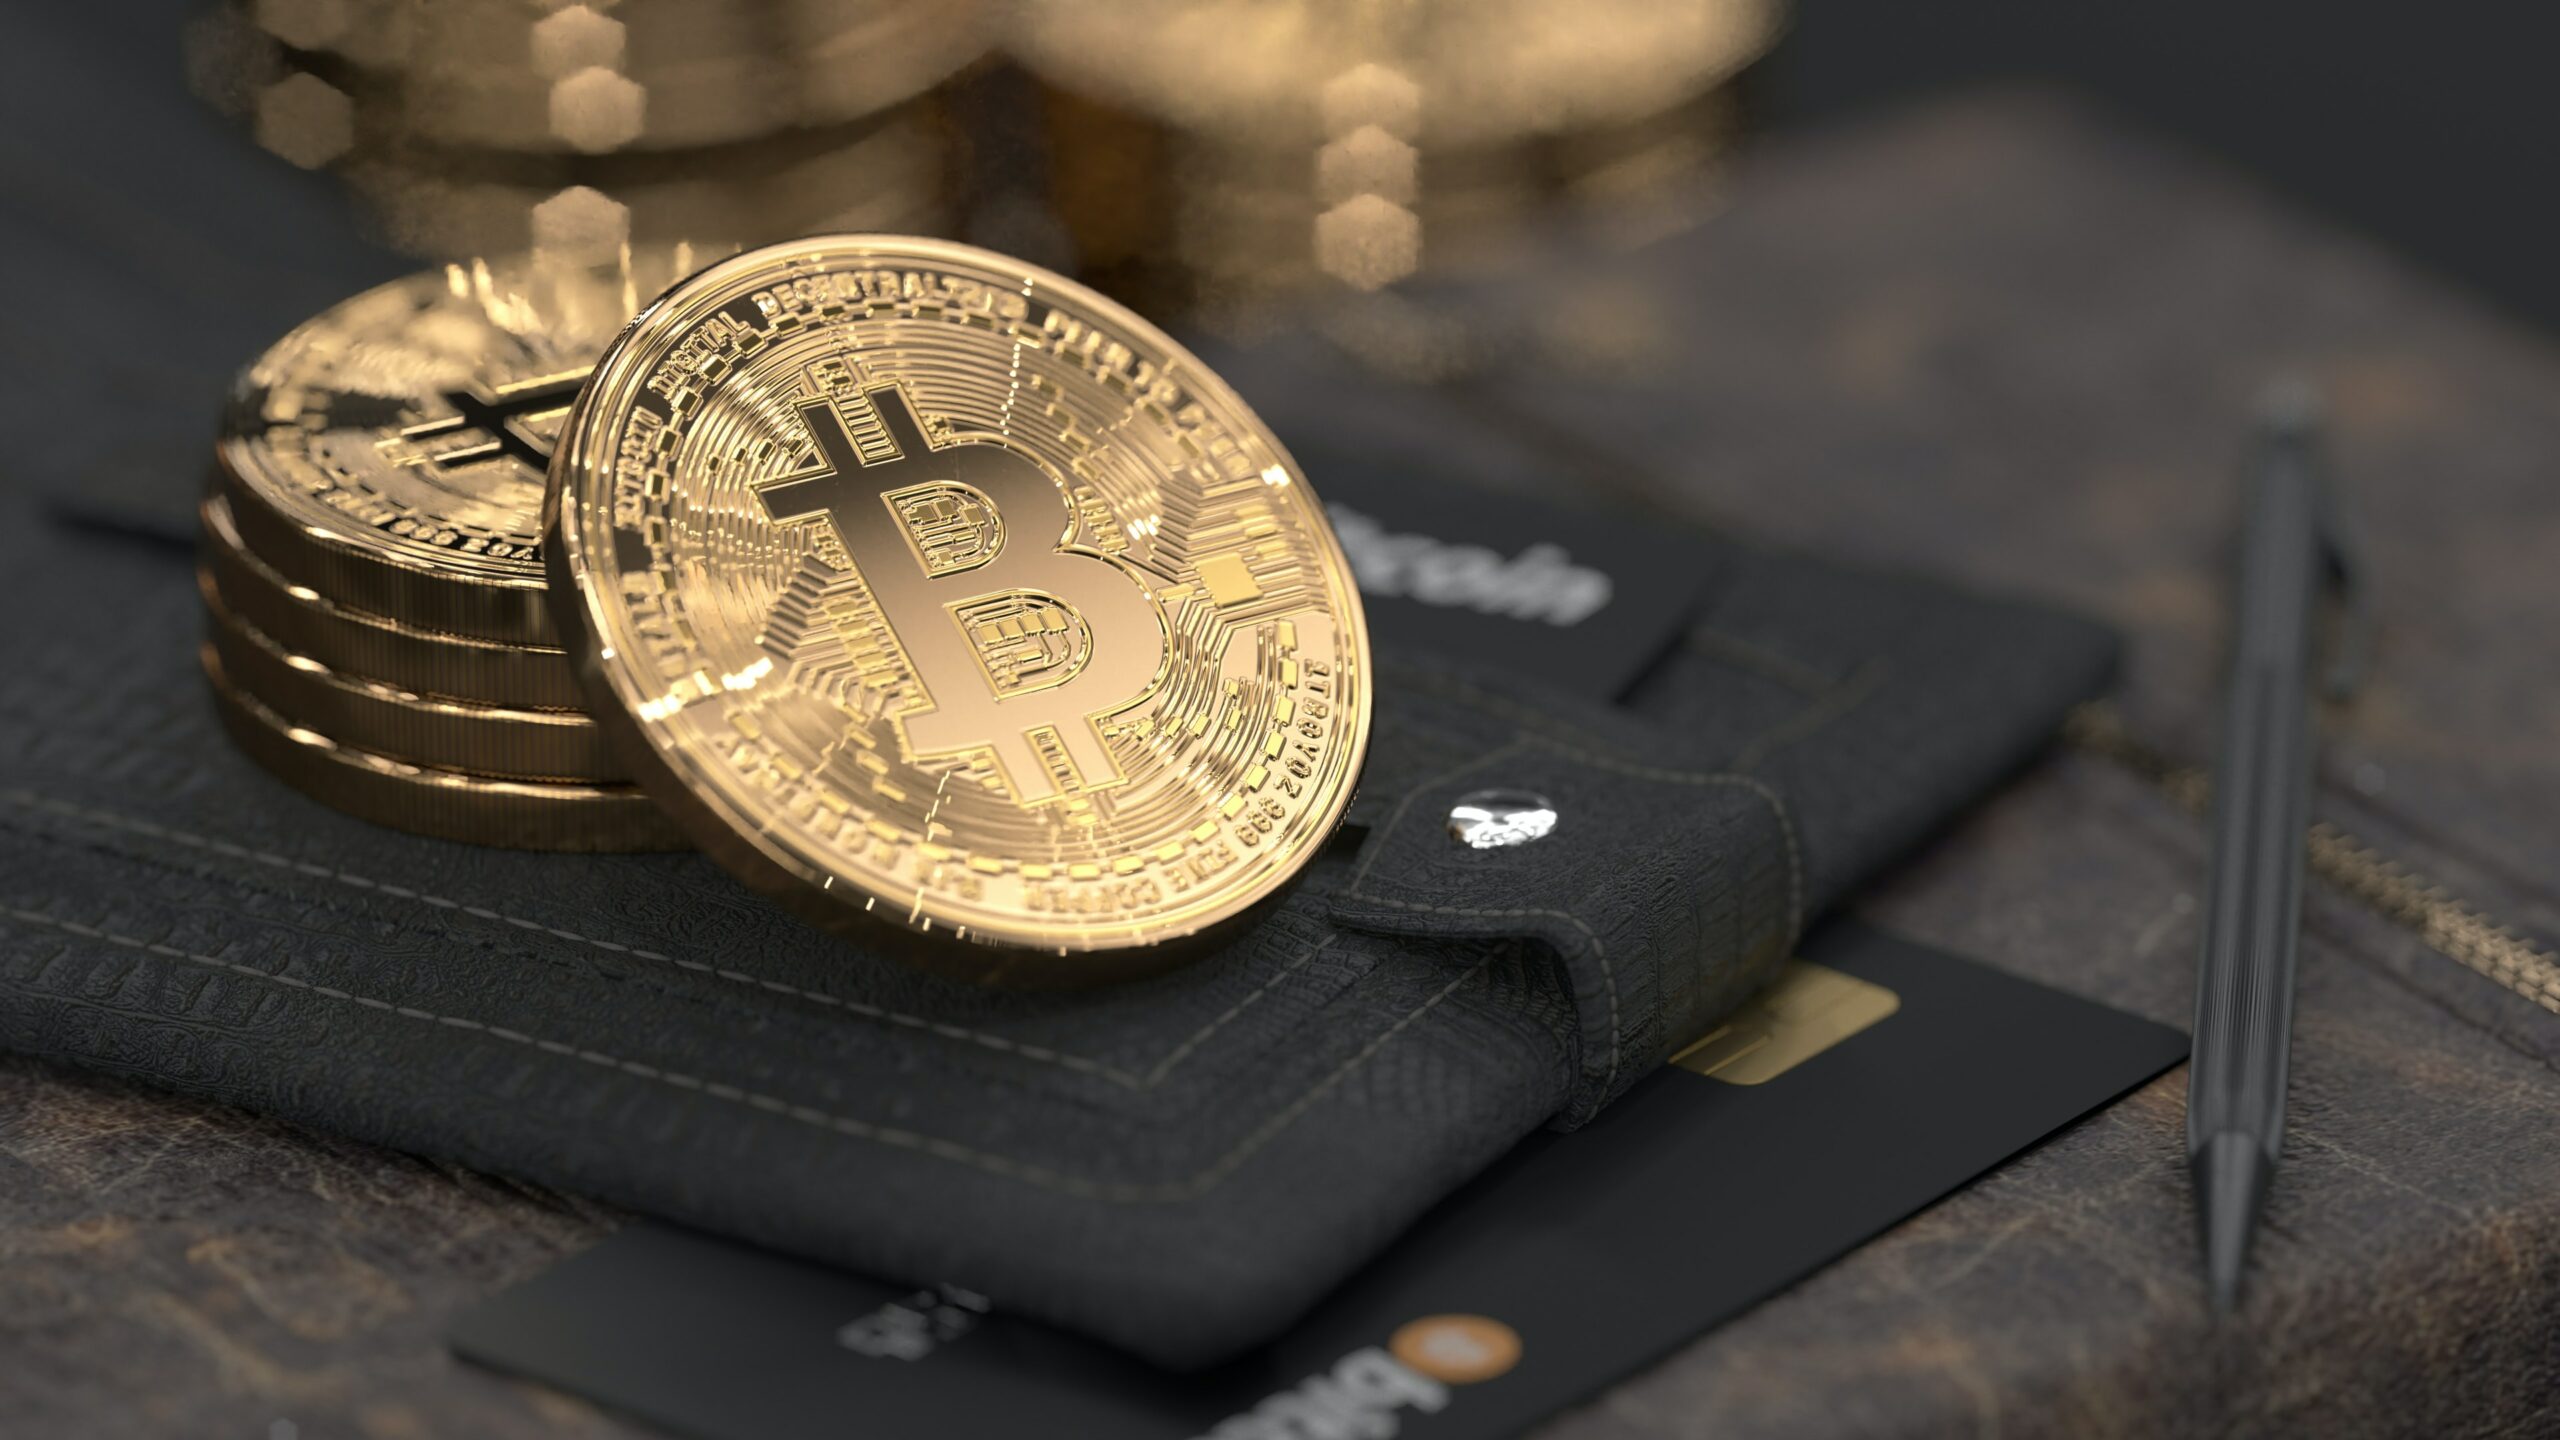 blockchain.com president shares his view on bitcoin